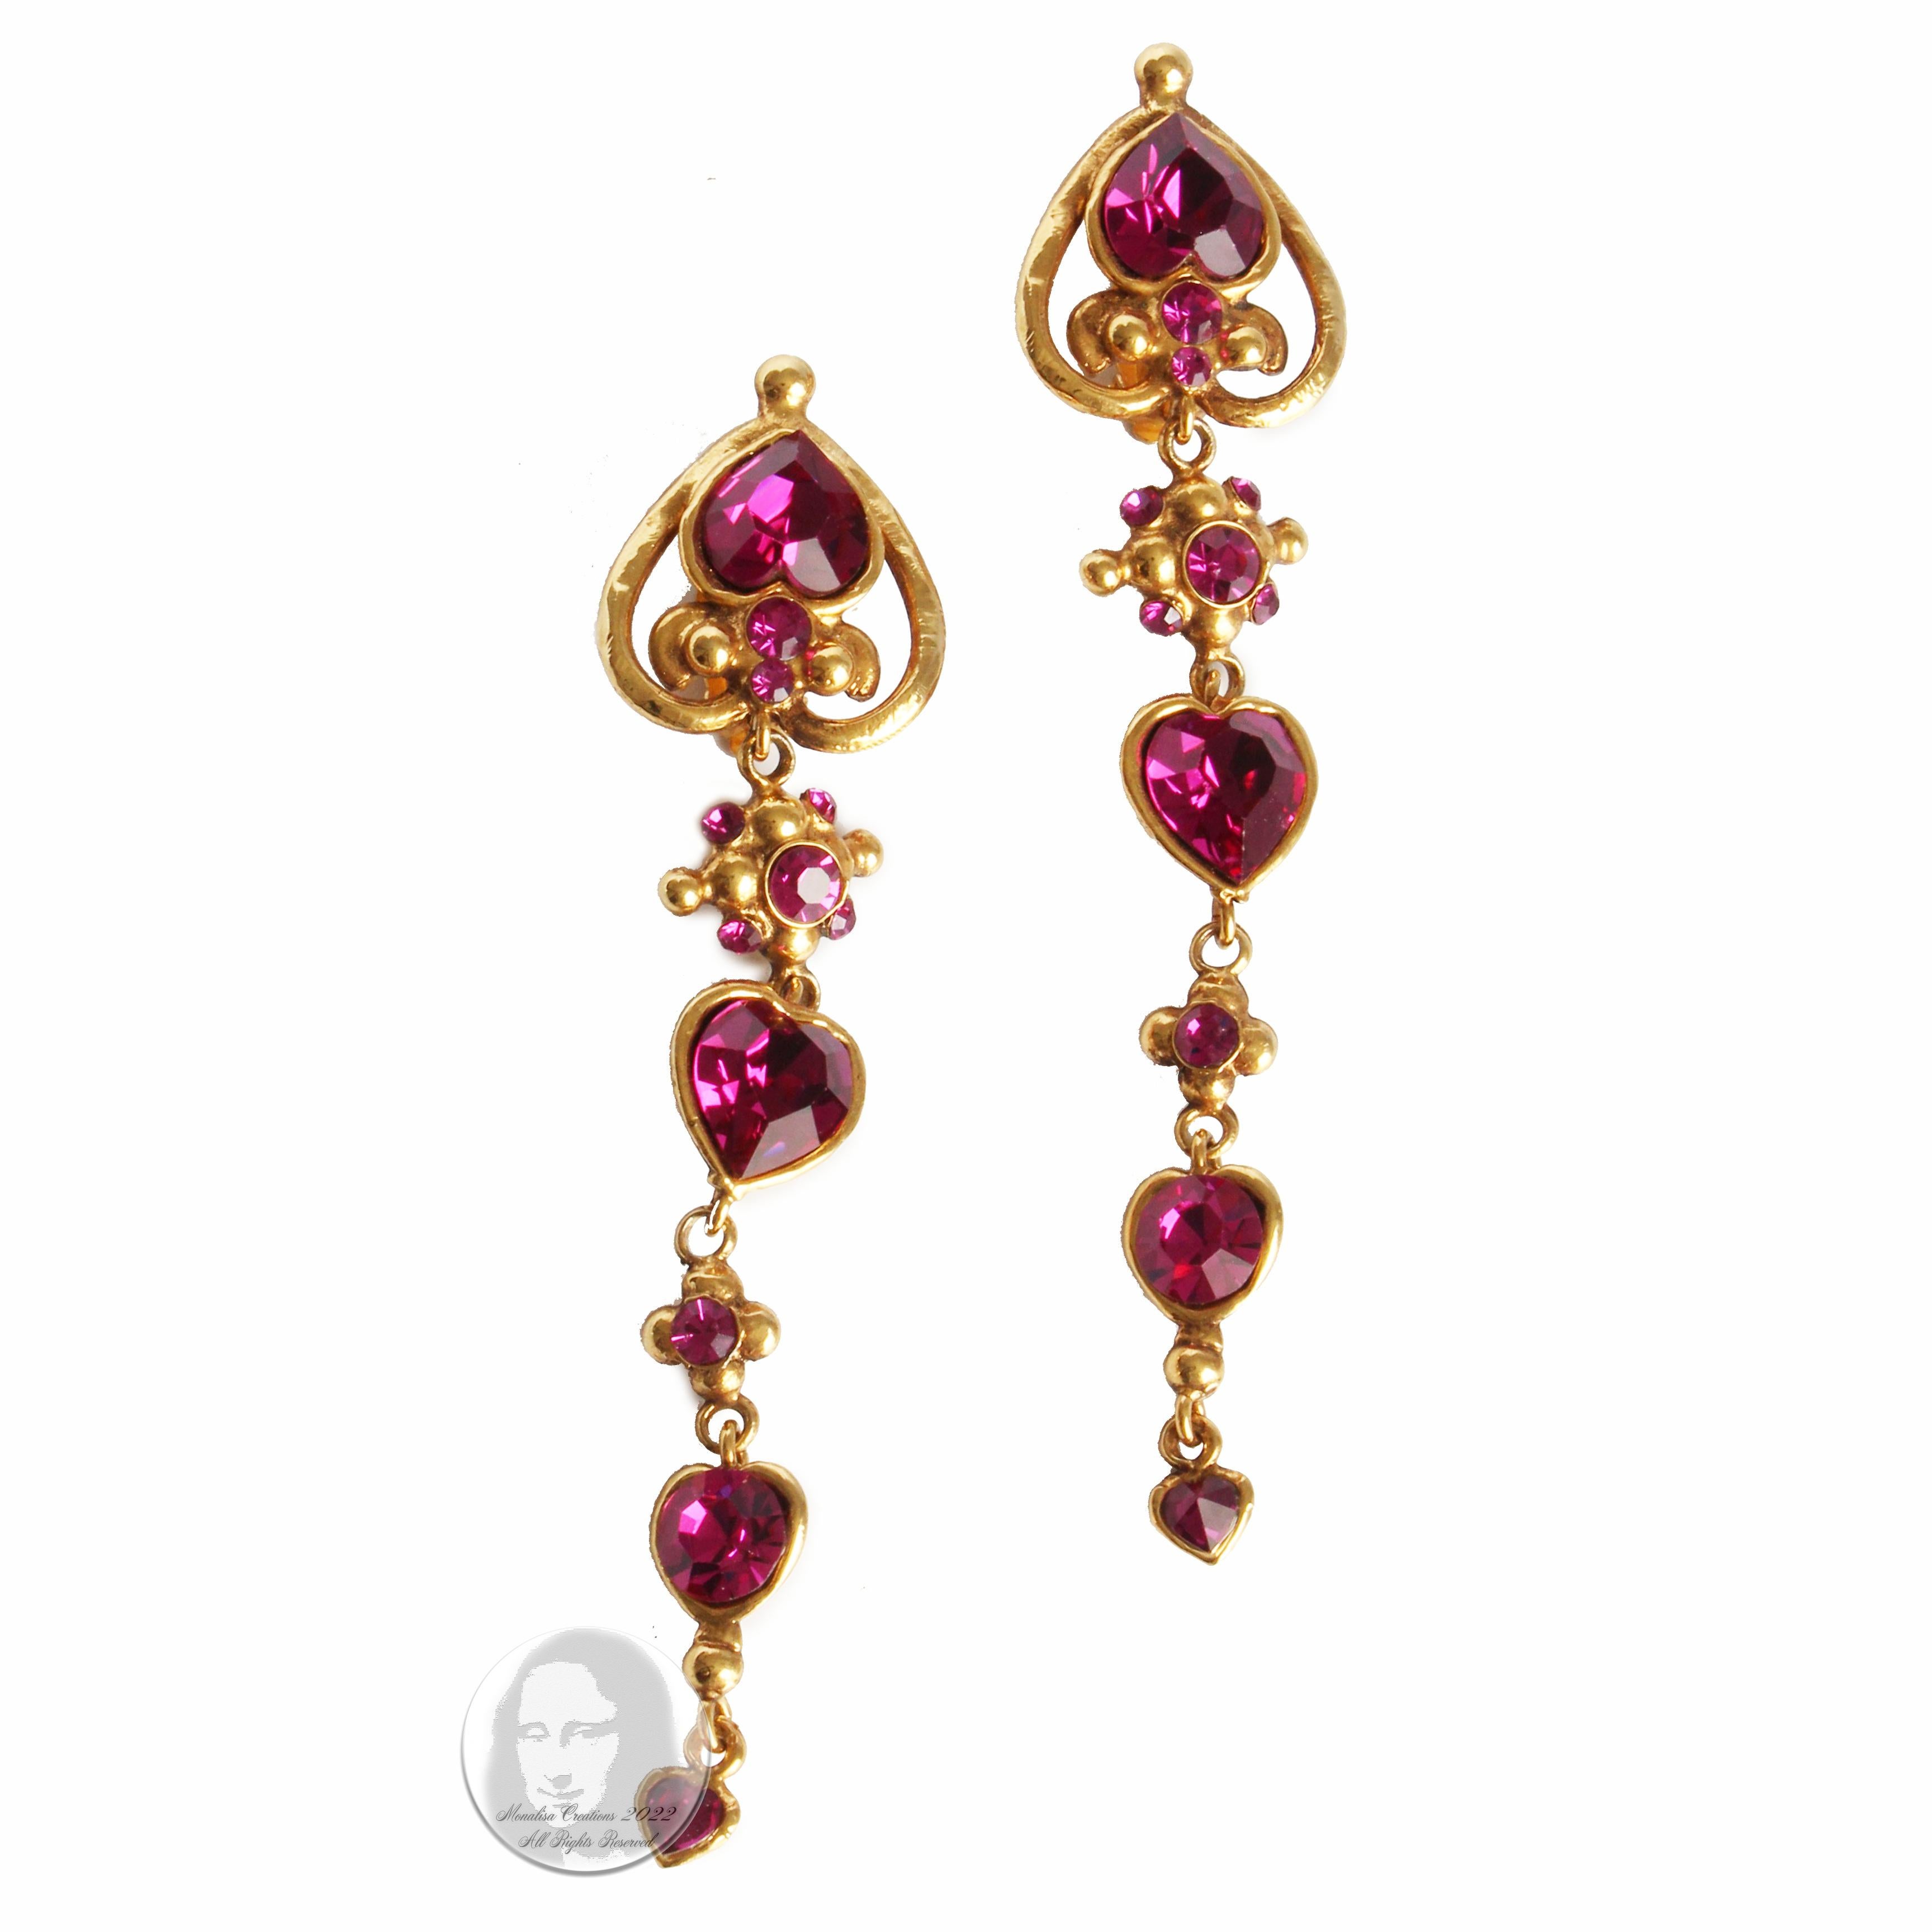 Baroque Revival Emanuel Ungaro Earrings Long Dangle Pink Stones Baroque Oversized 5in Vintage